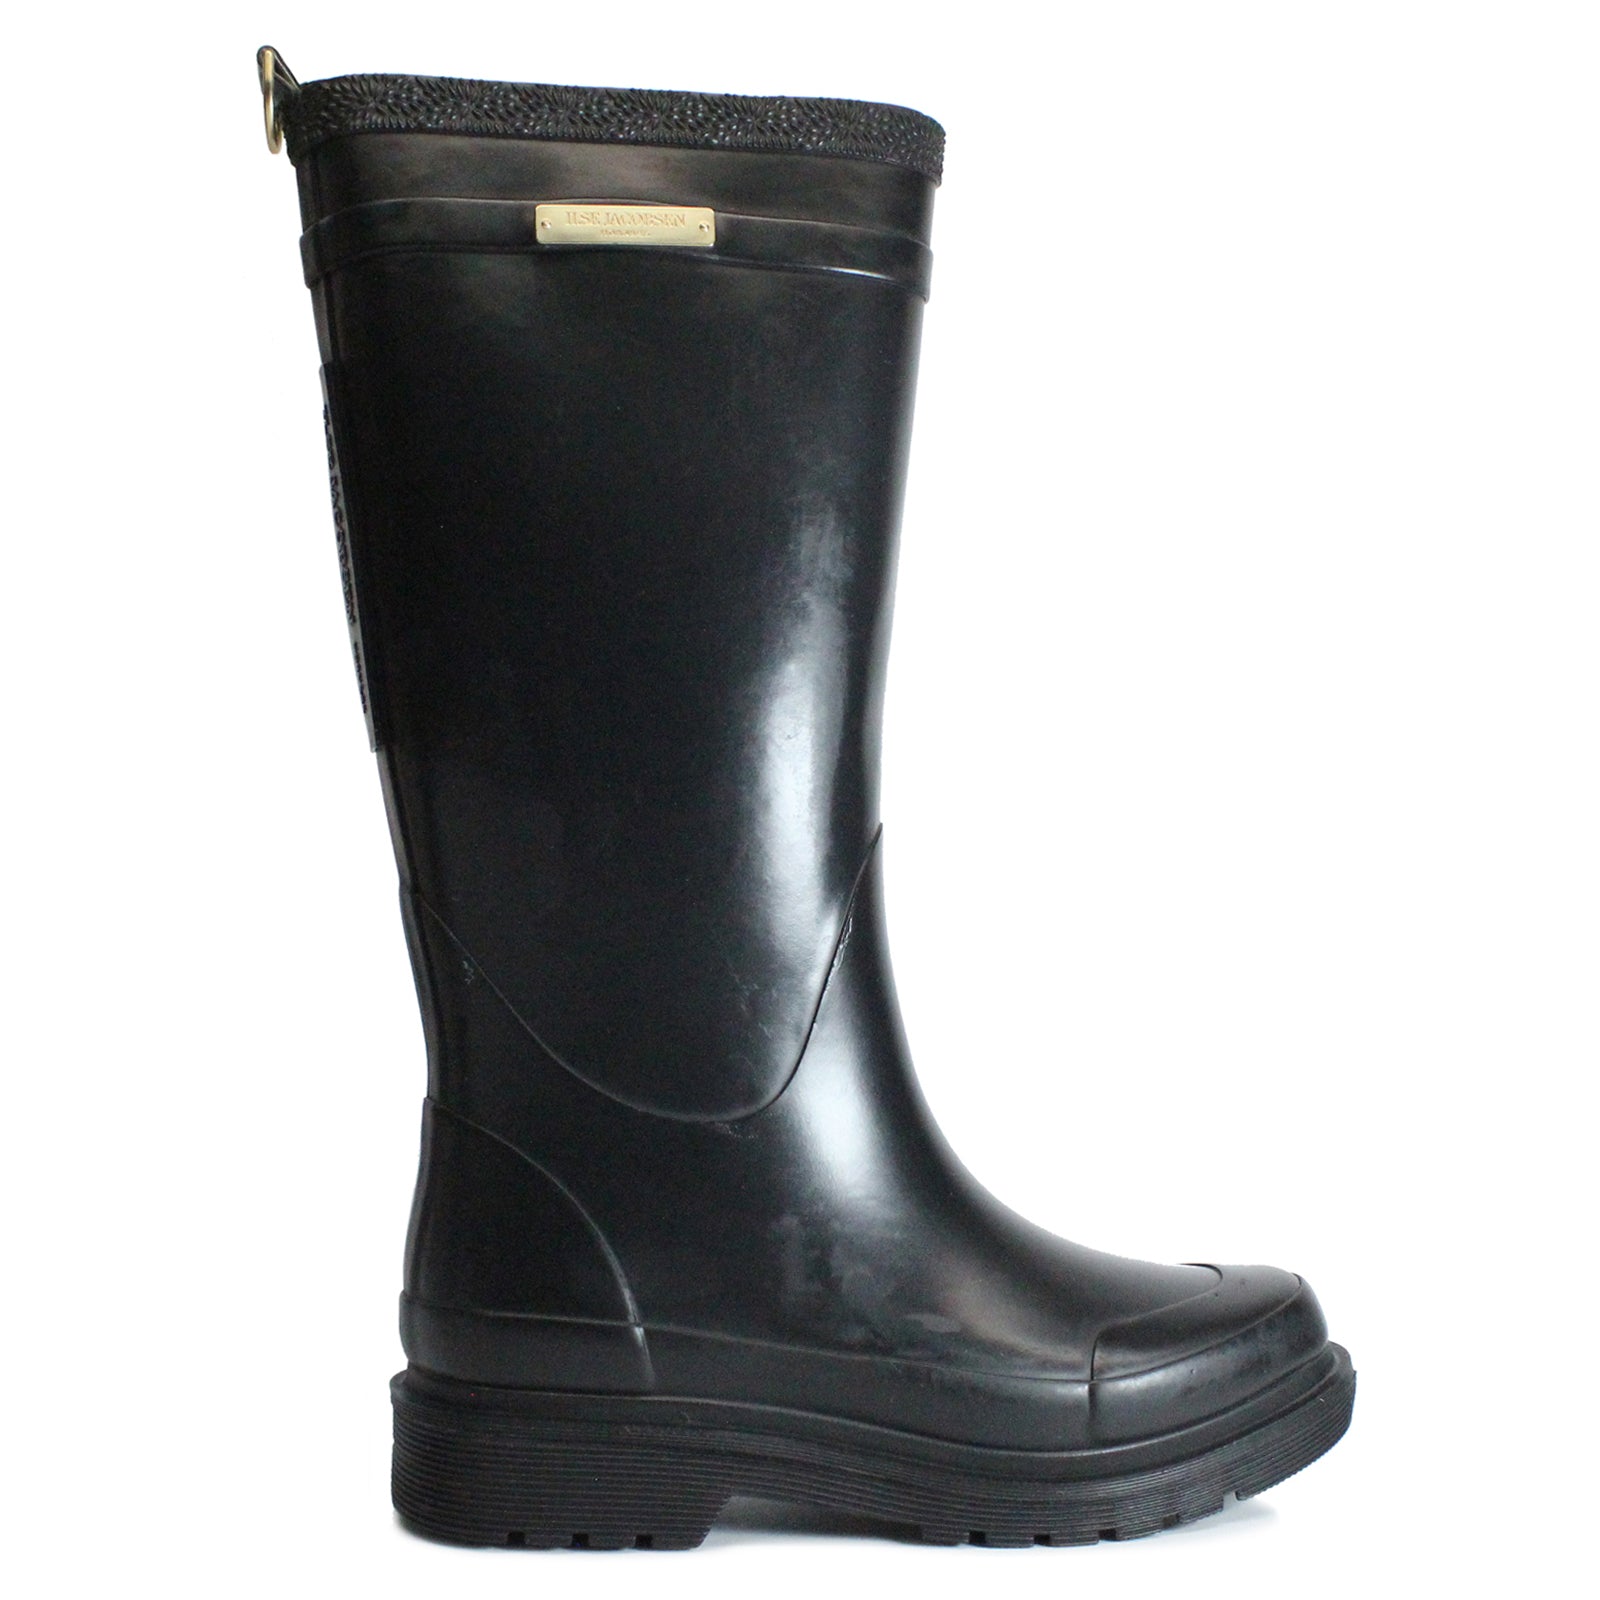 Ilse Jacobsen Womens Boots Rub350 Wellington - UK 4.5